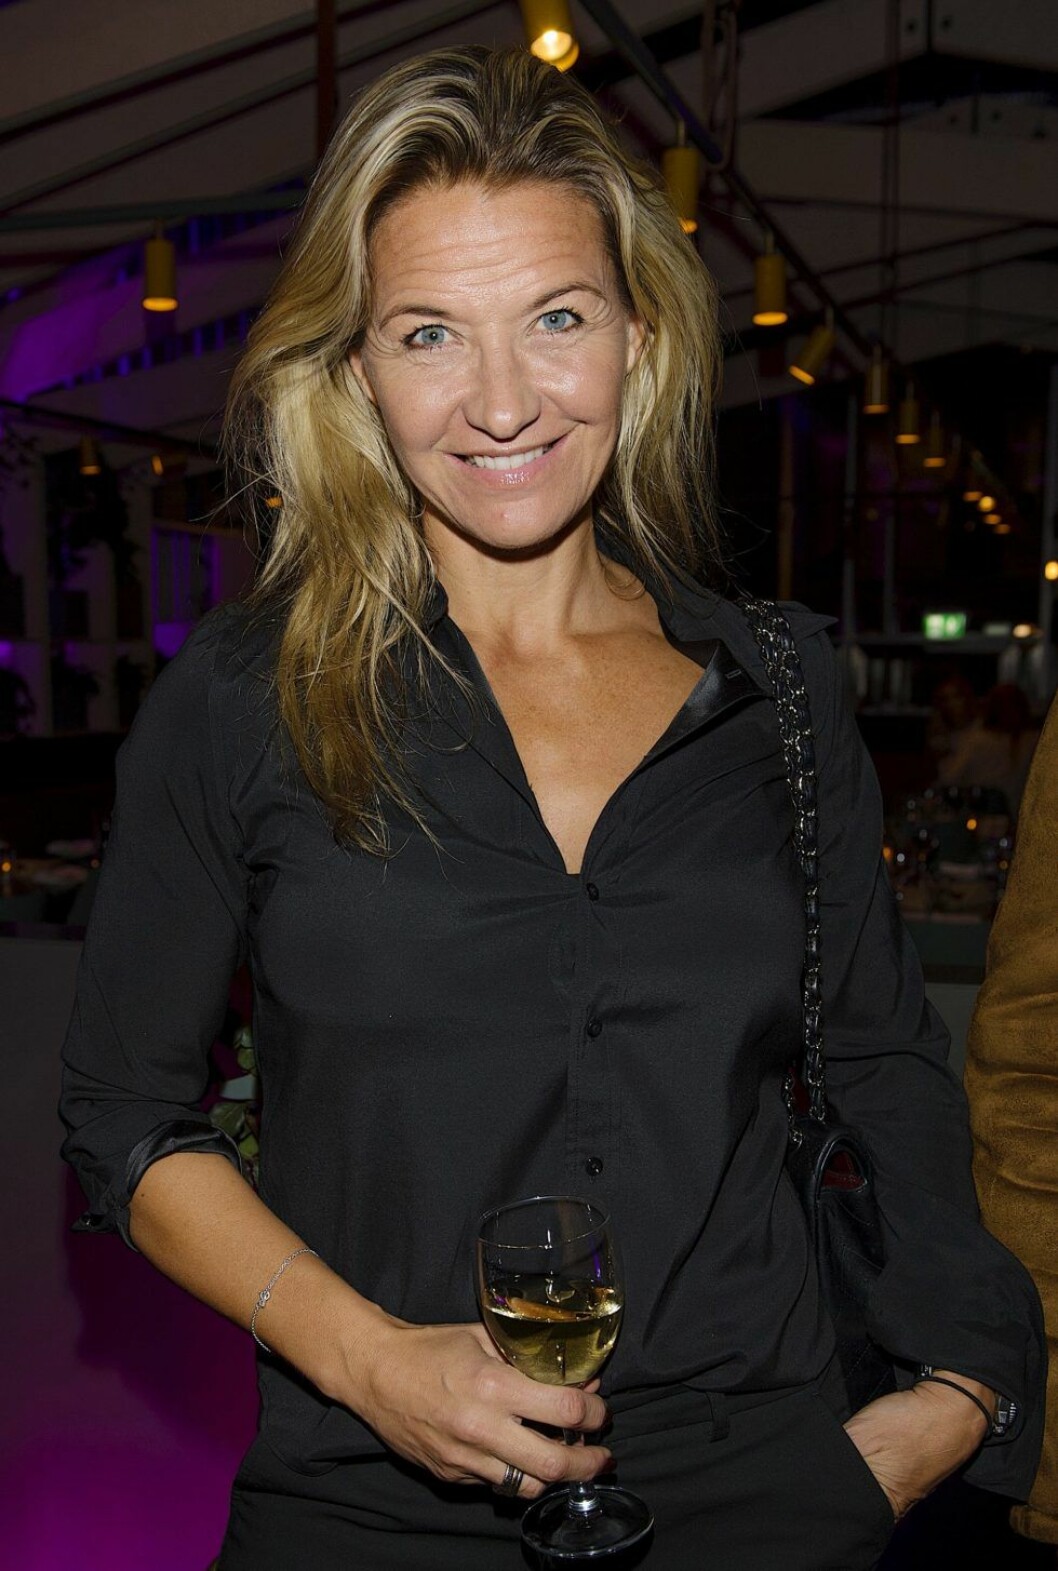 Kristin Kaspersen Pyjamasparty med Parnevik på Restaurang Mother, Stockholm 16-11-08. Foto © Eero Hannukainen EEROBILD AB IBL